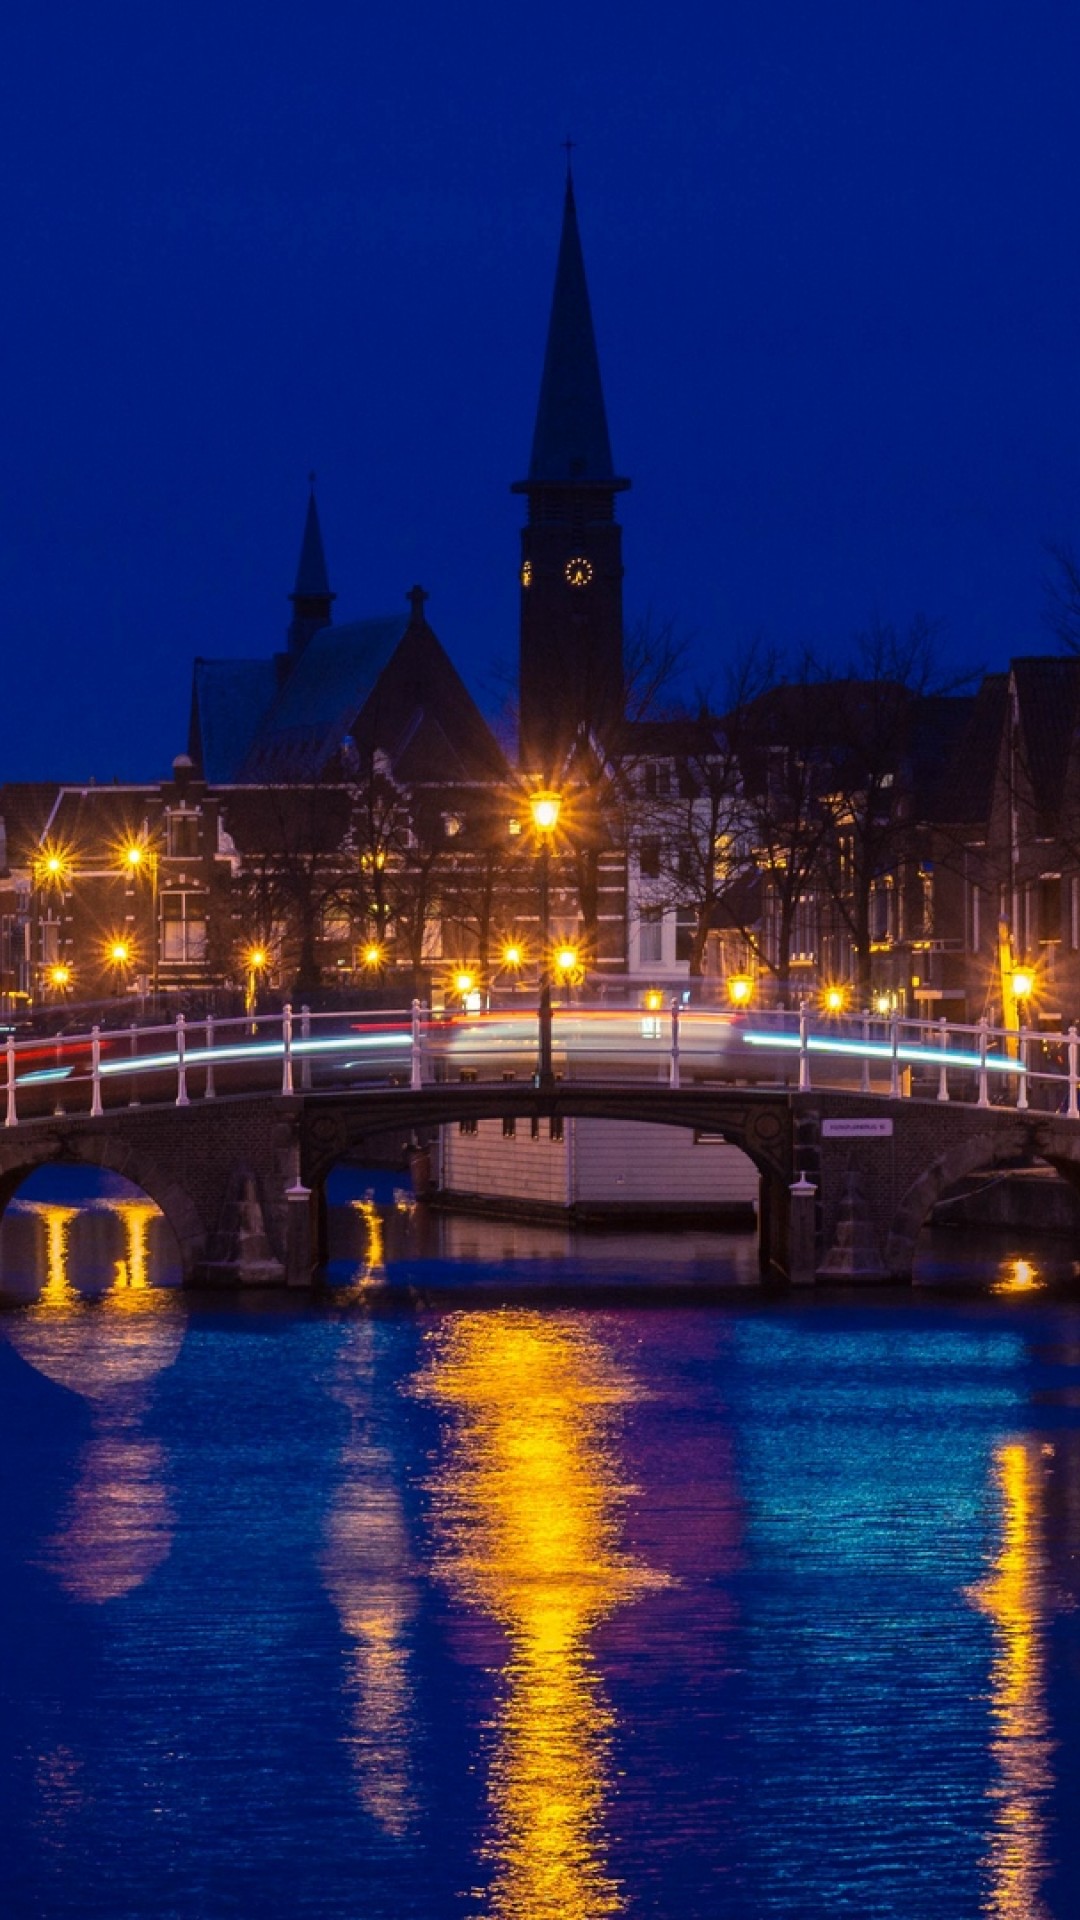 Netherlands bridge at niight HD Wallpaper